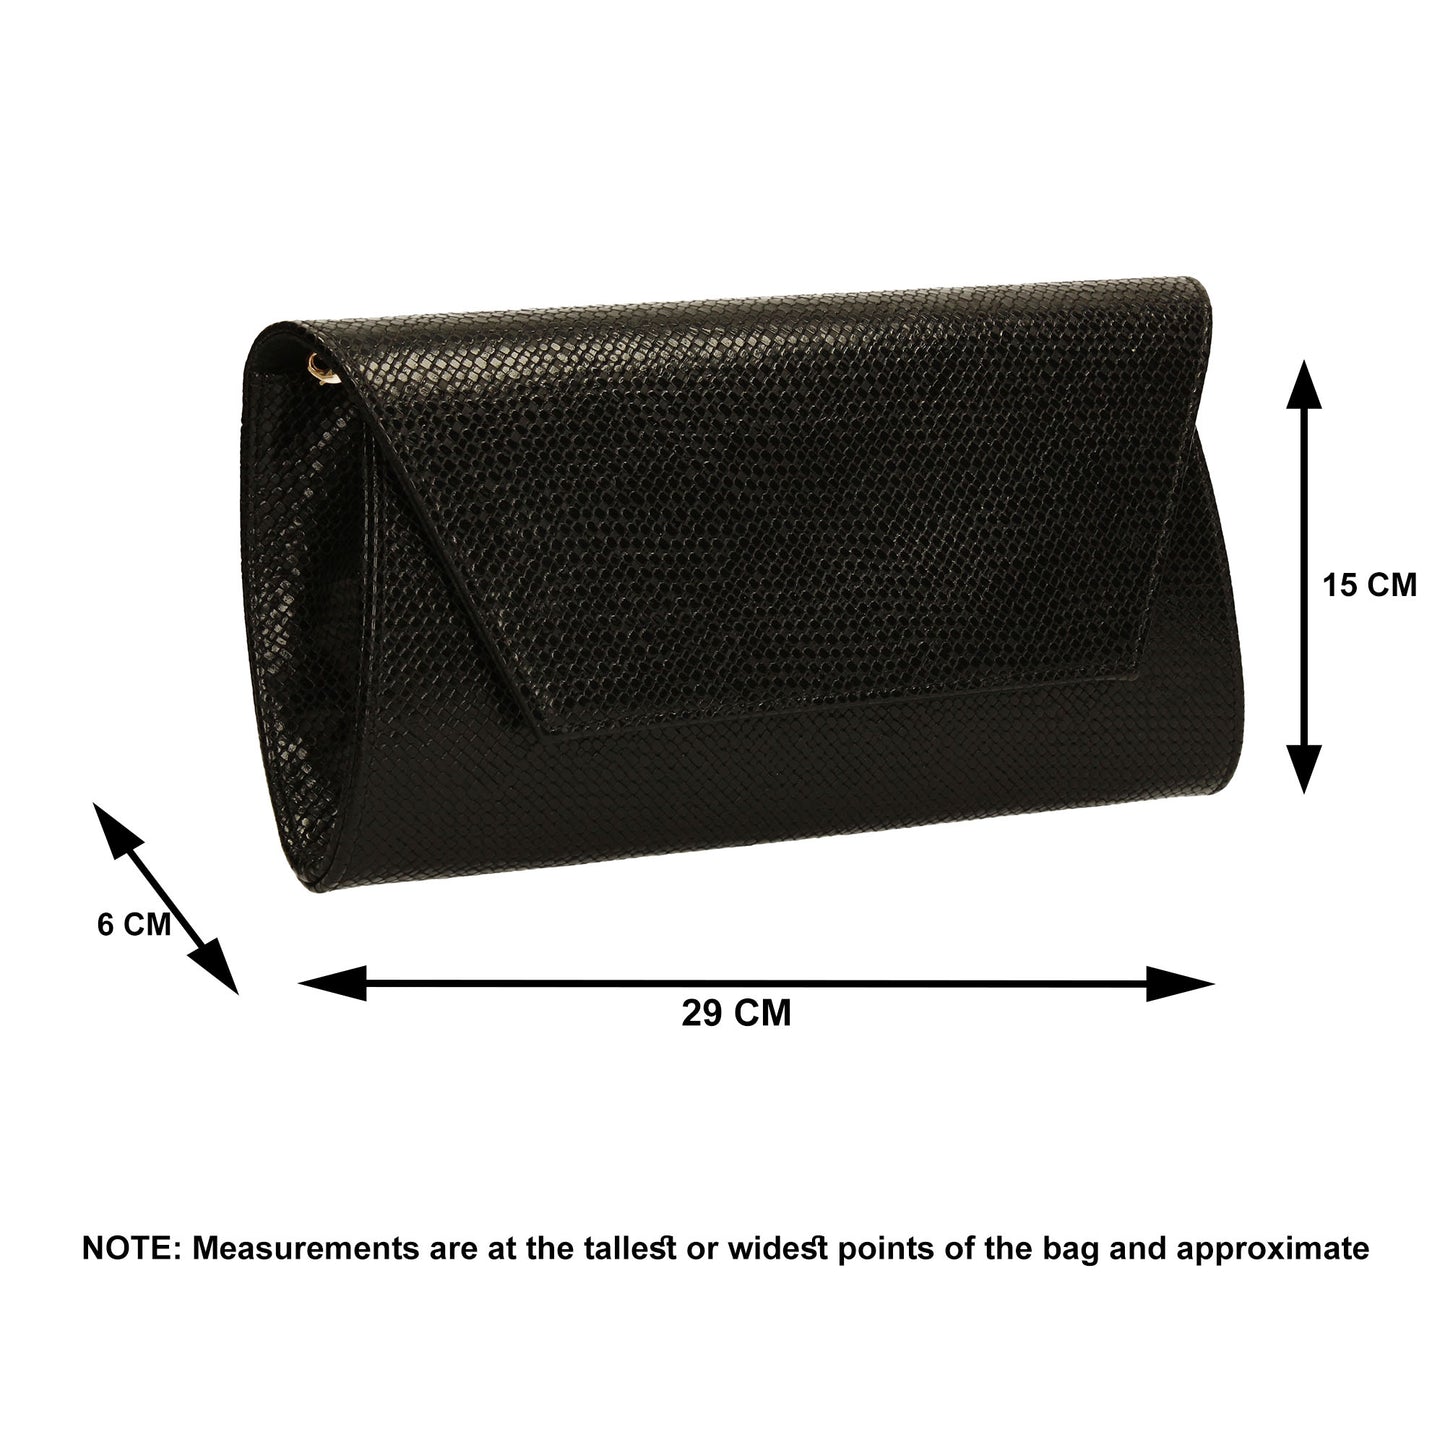 SWANKYSWANS Merci Micro Clutch Bag Black Cute Cheap Clutch Bag For Weddings School and Work